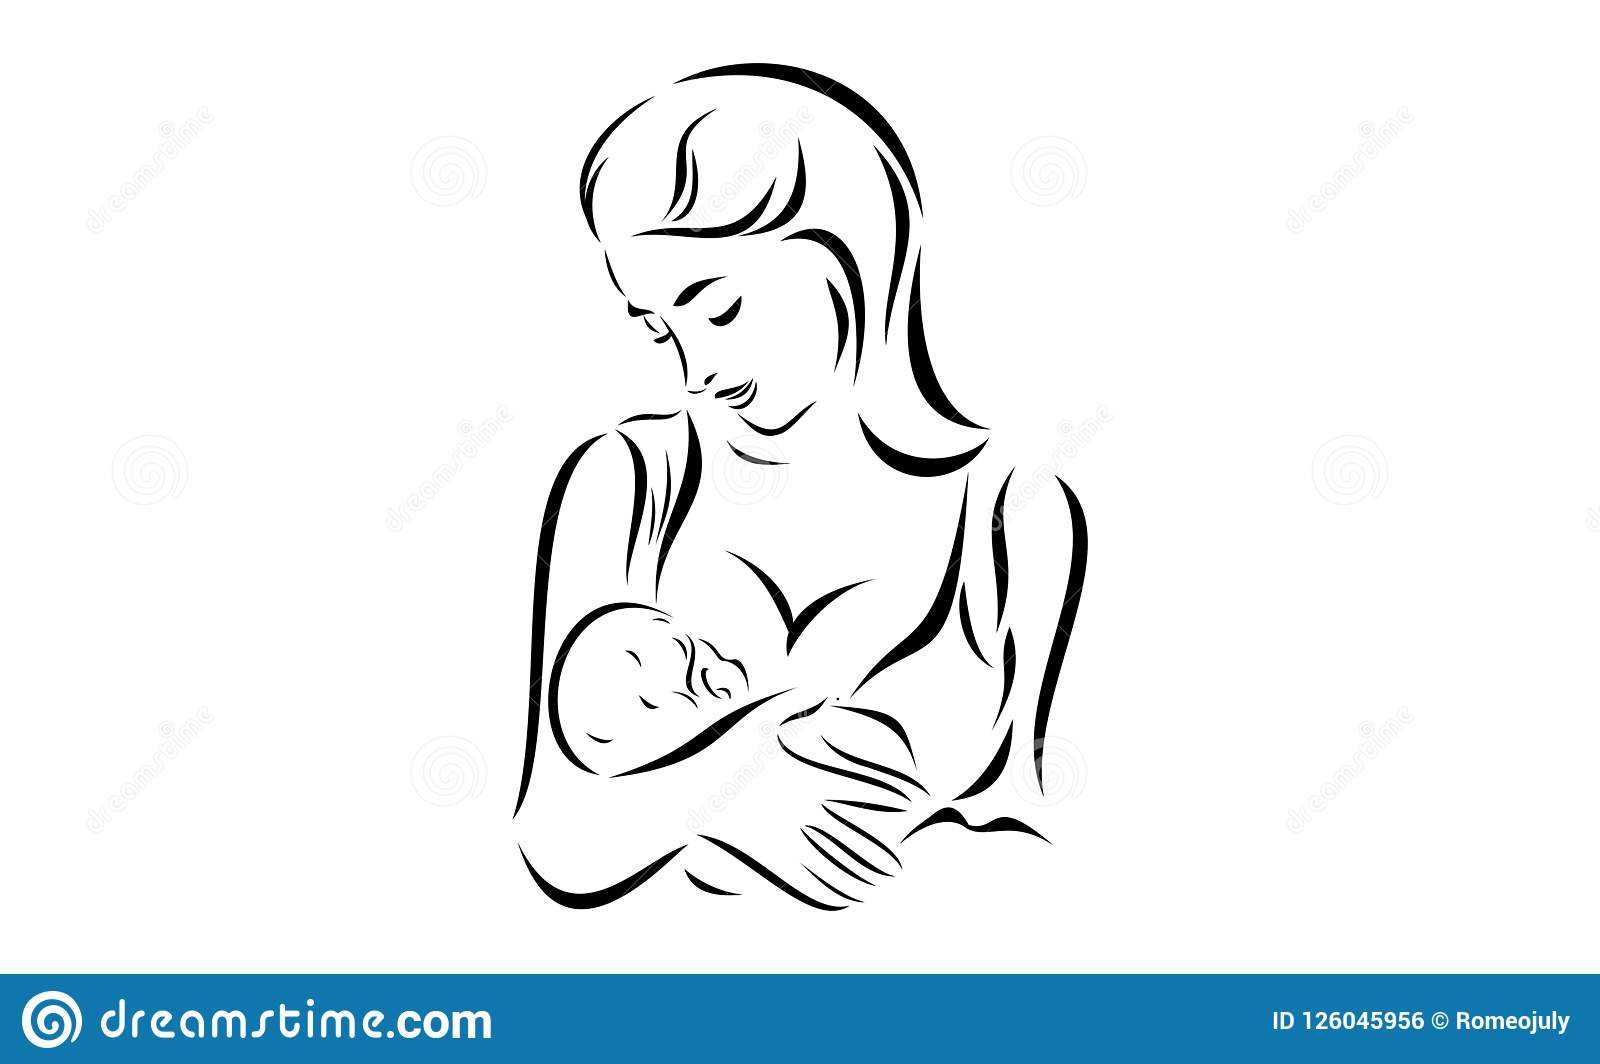 Breastfeeding Blank Sketch Template Stock Illustration Throughout Blank Model Sketch Template